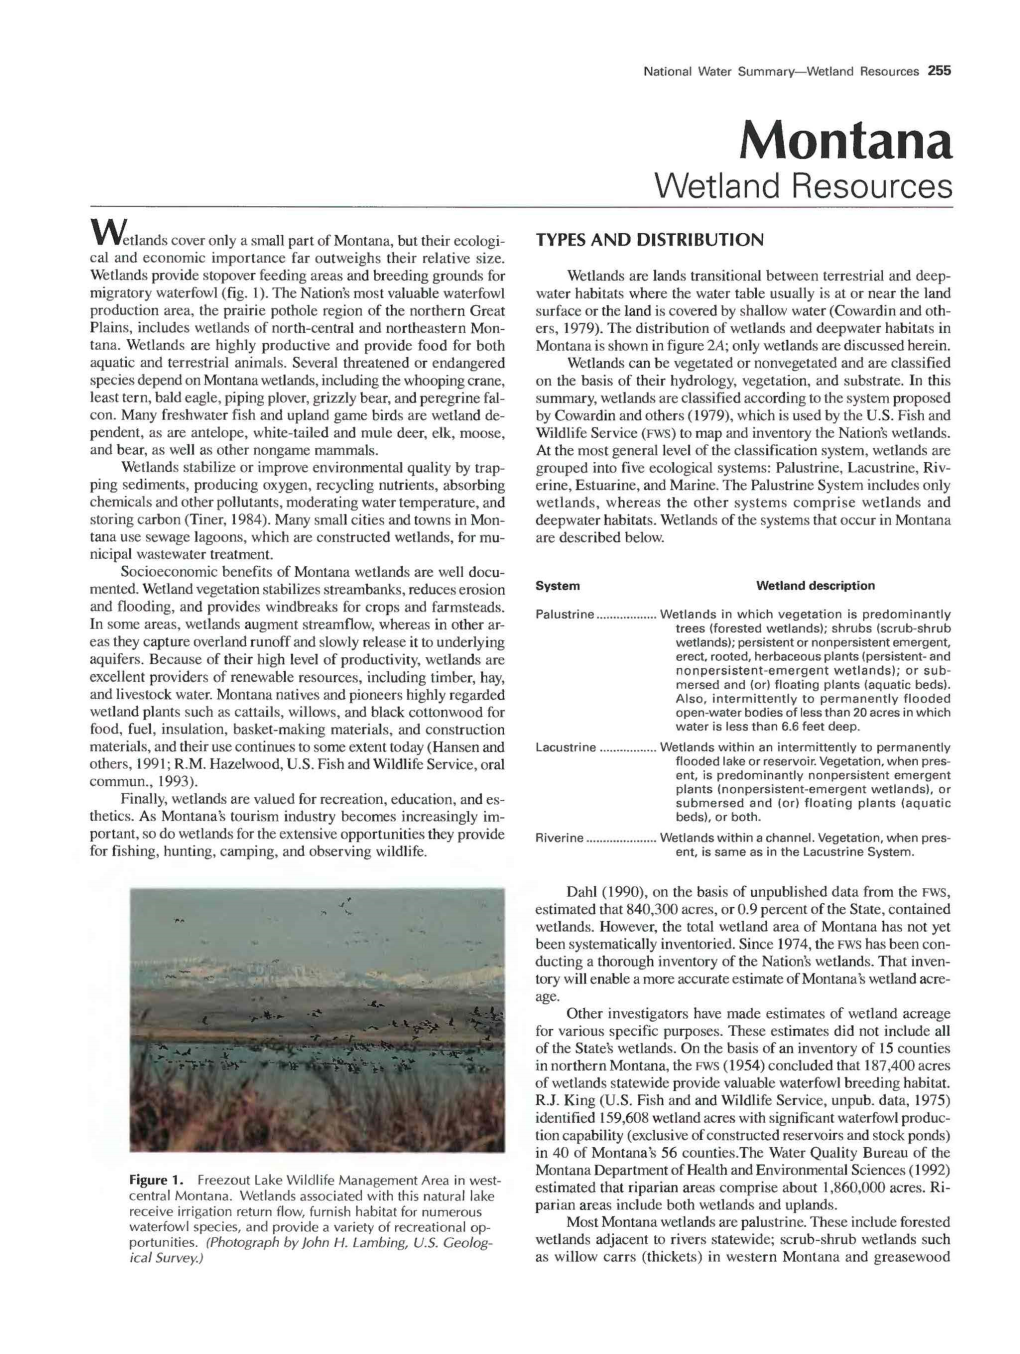 National Water Summary Wetland Resources: Montana